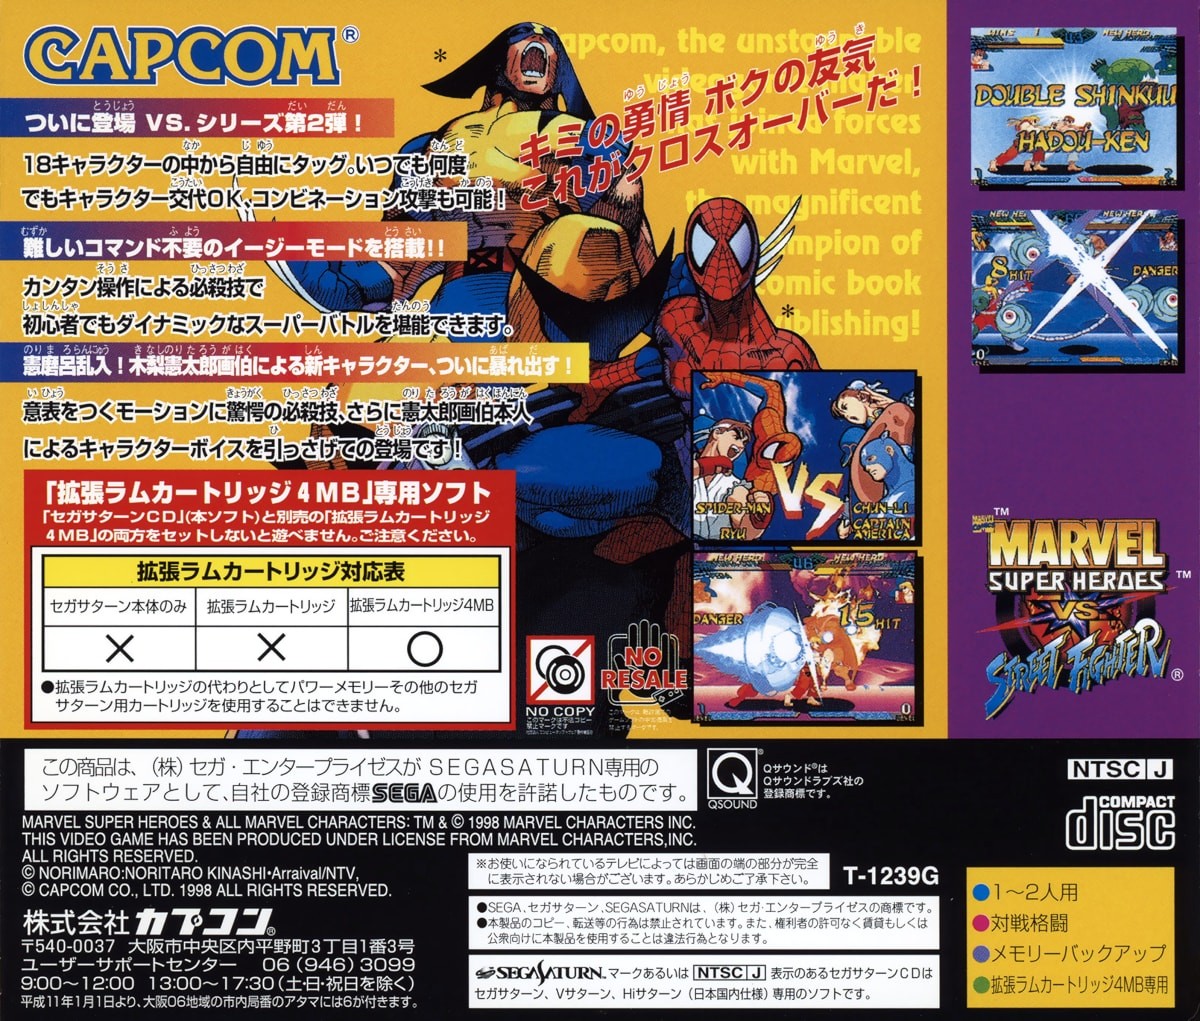 Marvel Super Heroes vs. Street Fighter cover